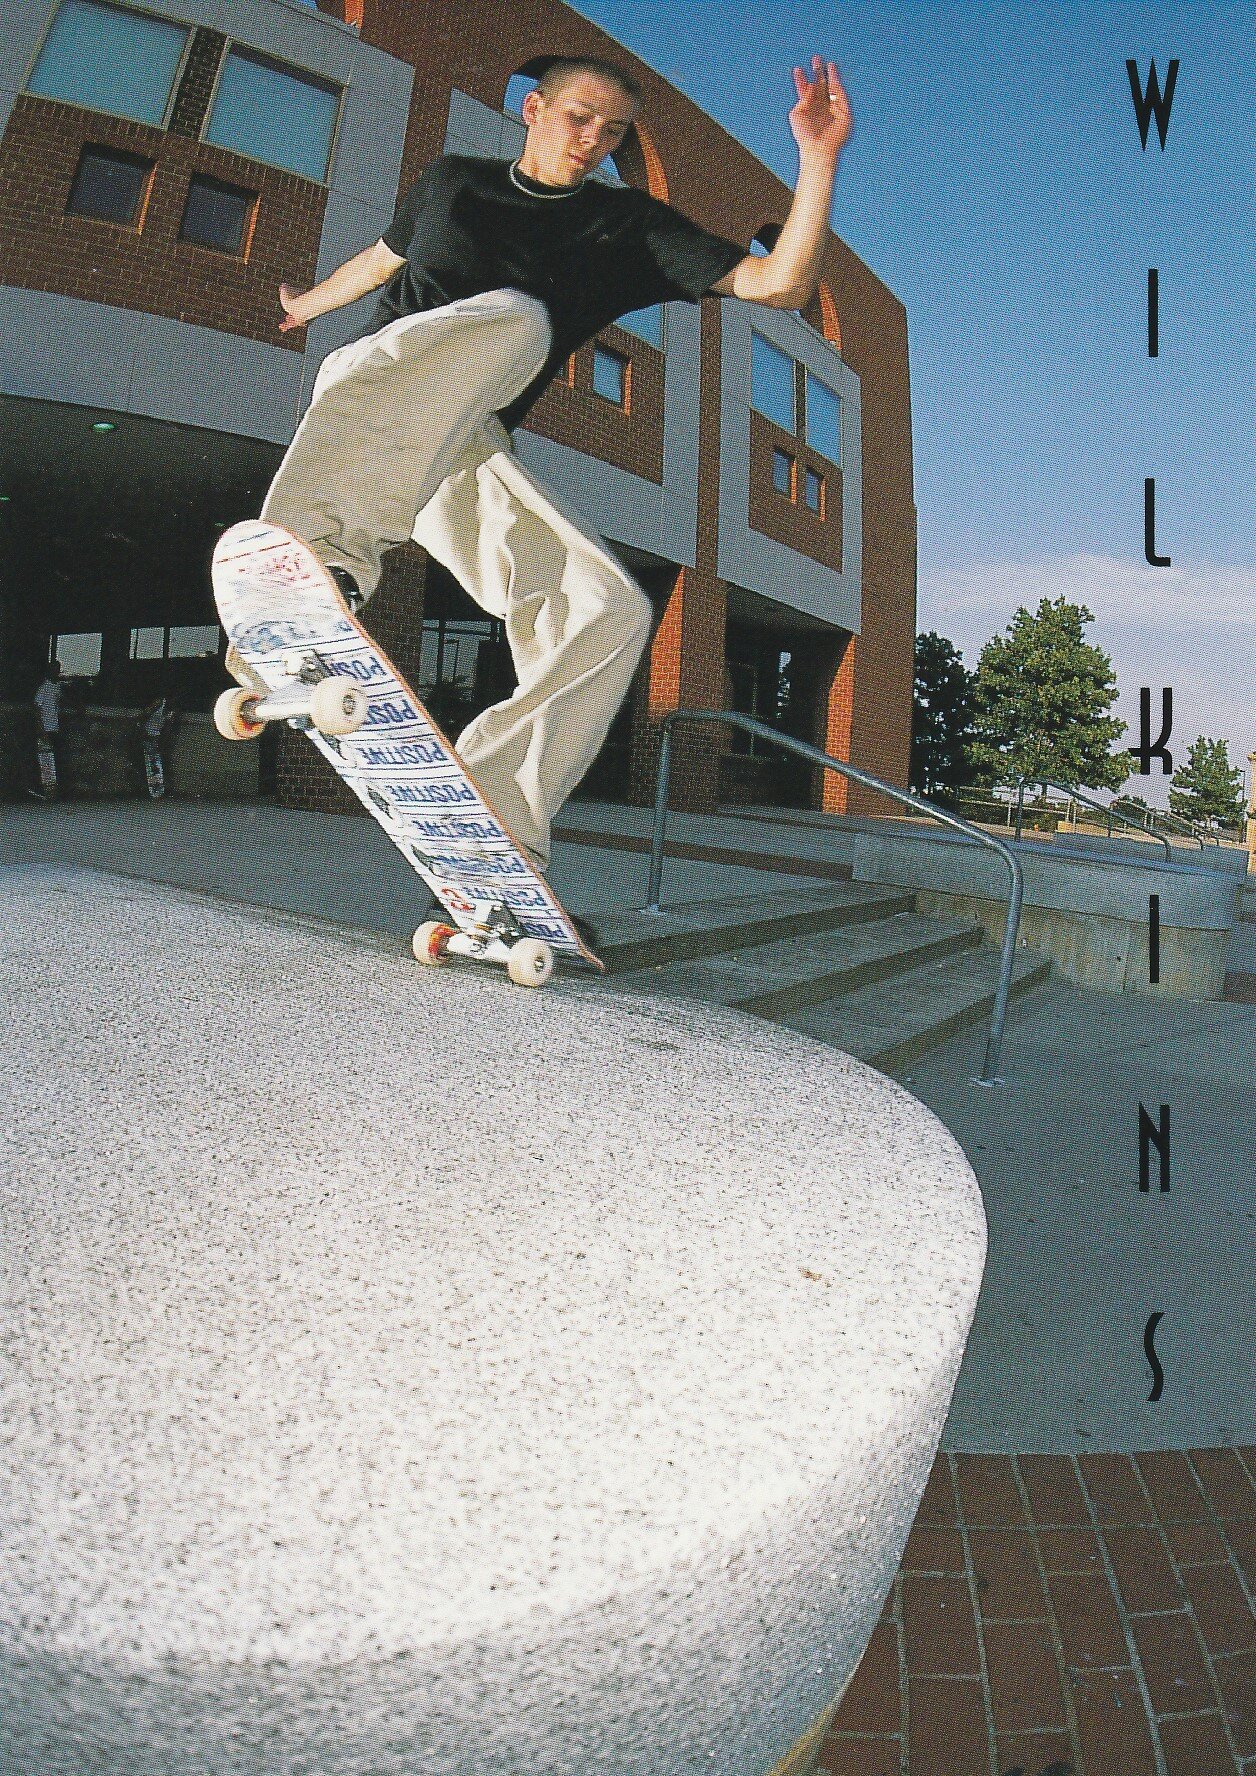 NBS-Wilkins_1997 - Boston - Nose Blunt Slide - Possibly Geoff Kula